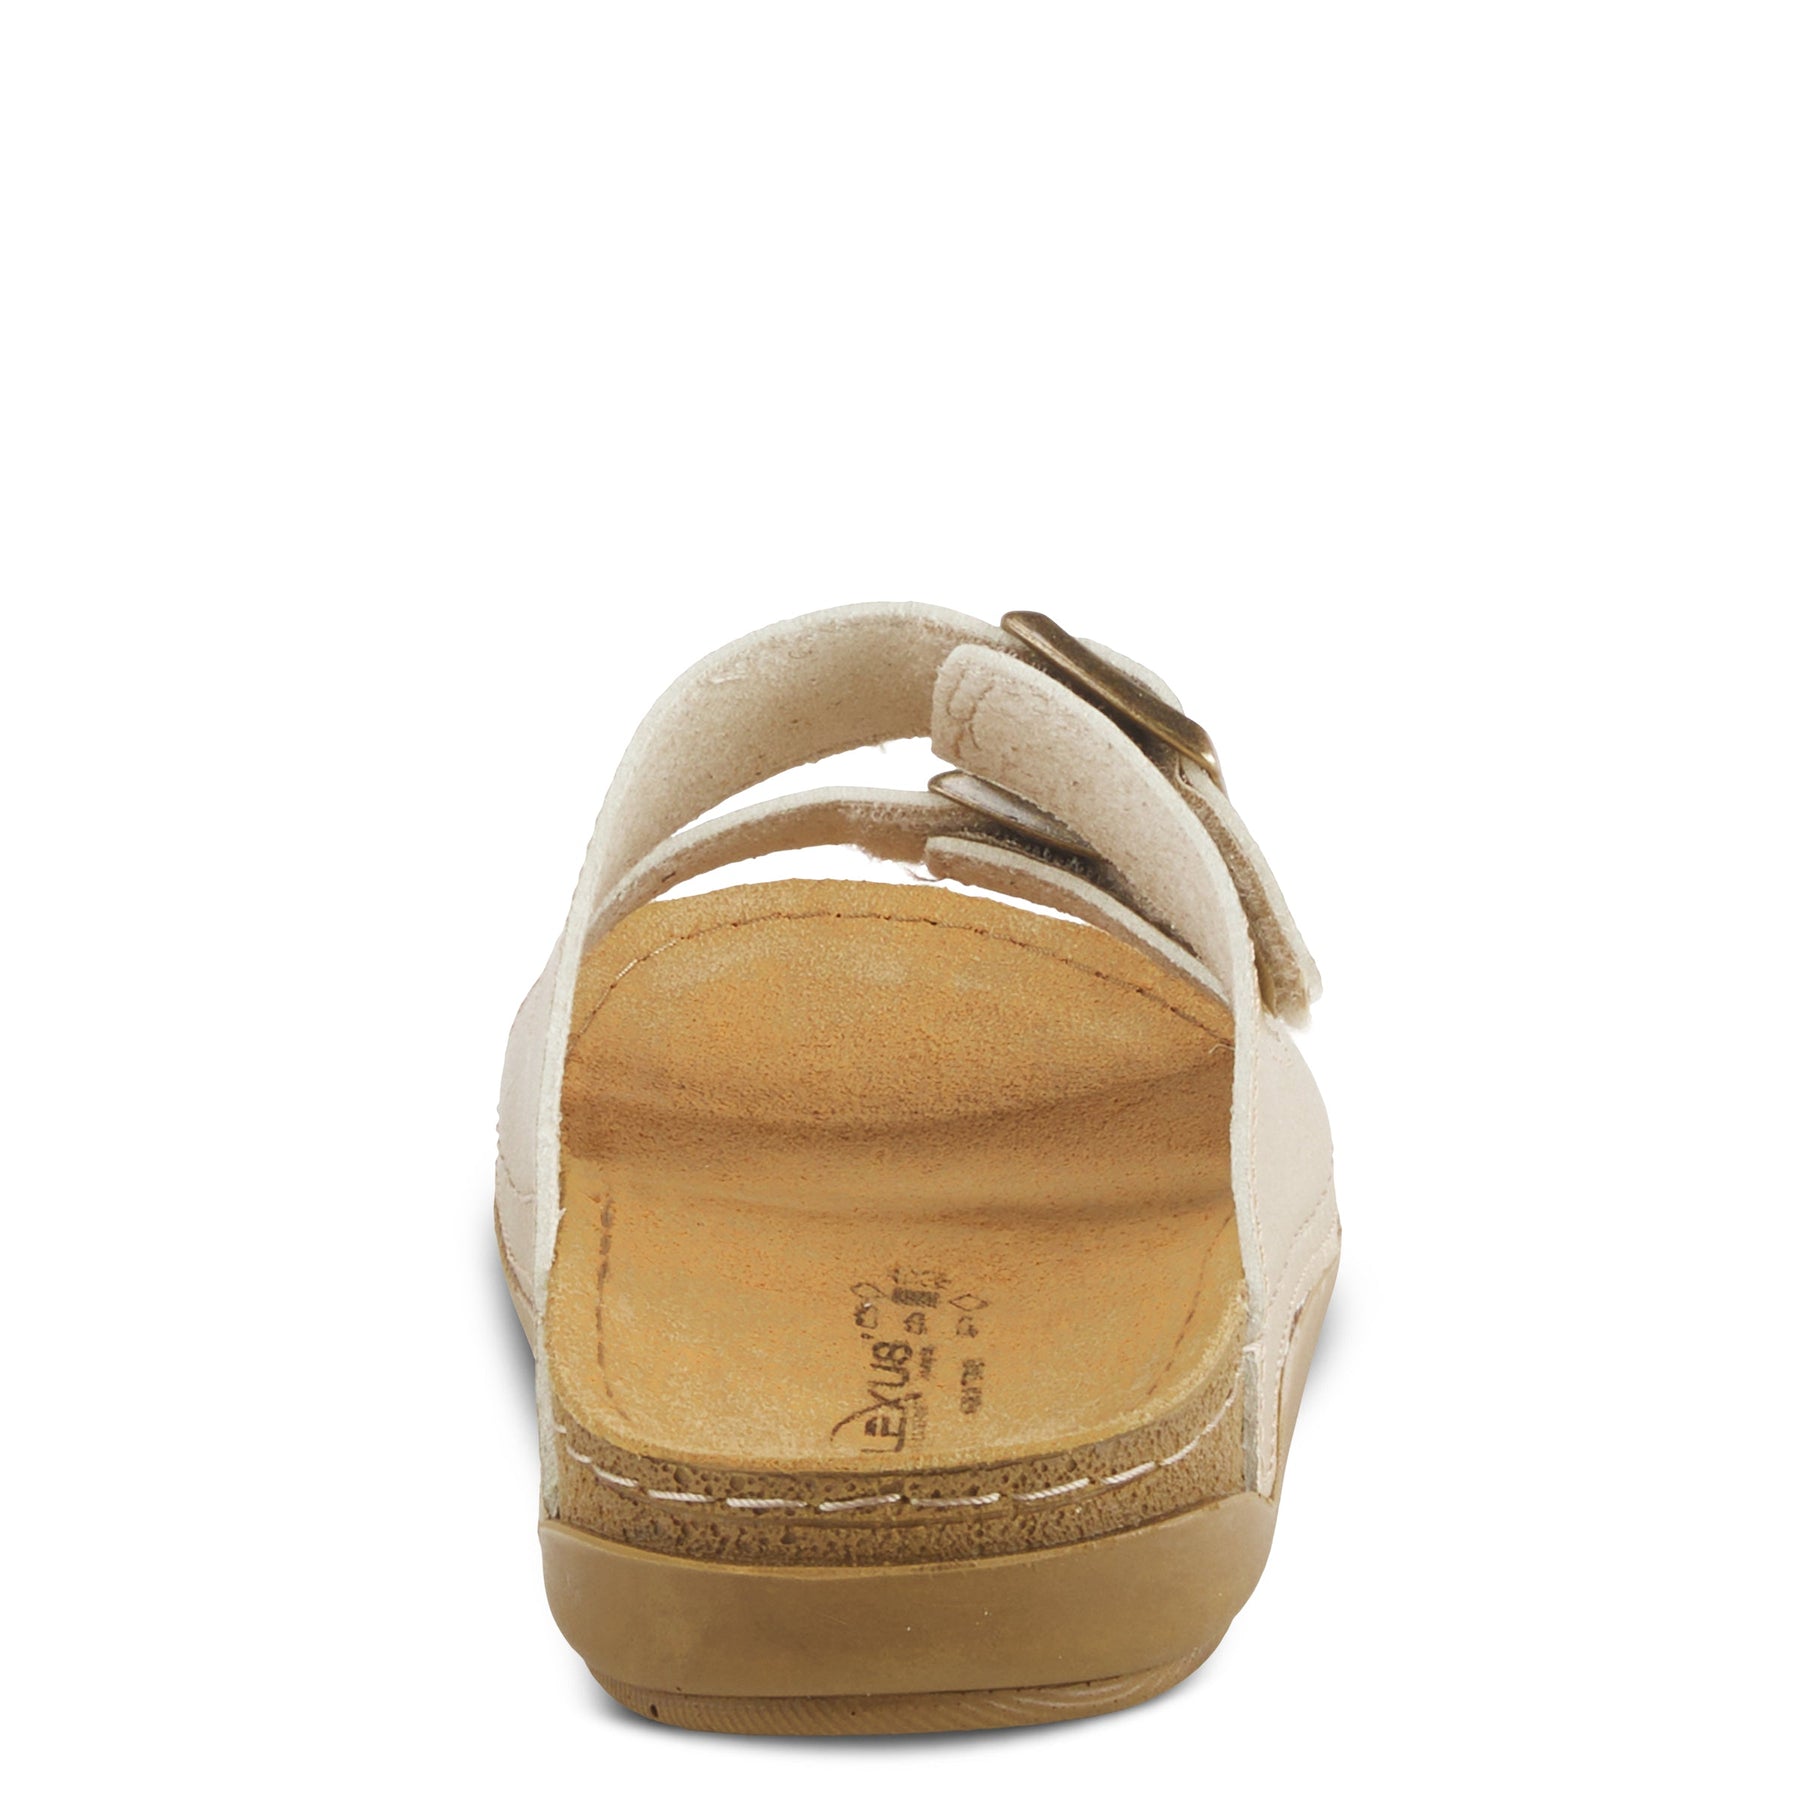 Flexus Abbas Slide Sandal: Sweet Slide Sandal – Spring Step Shoes